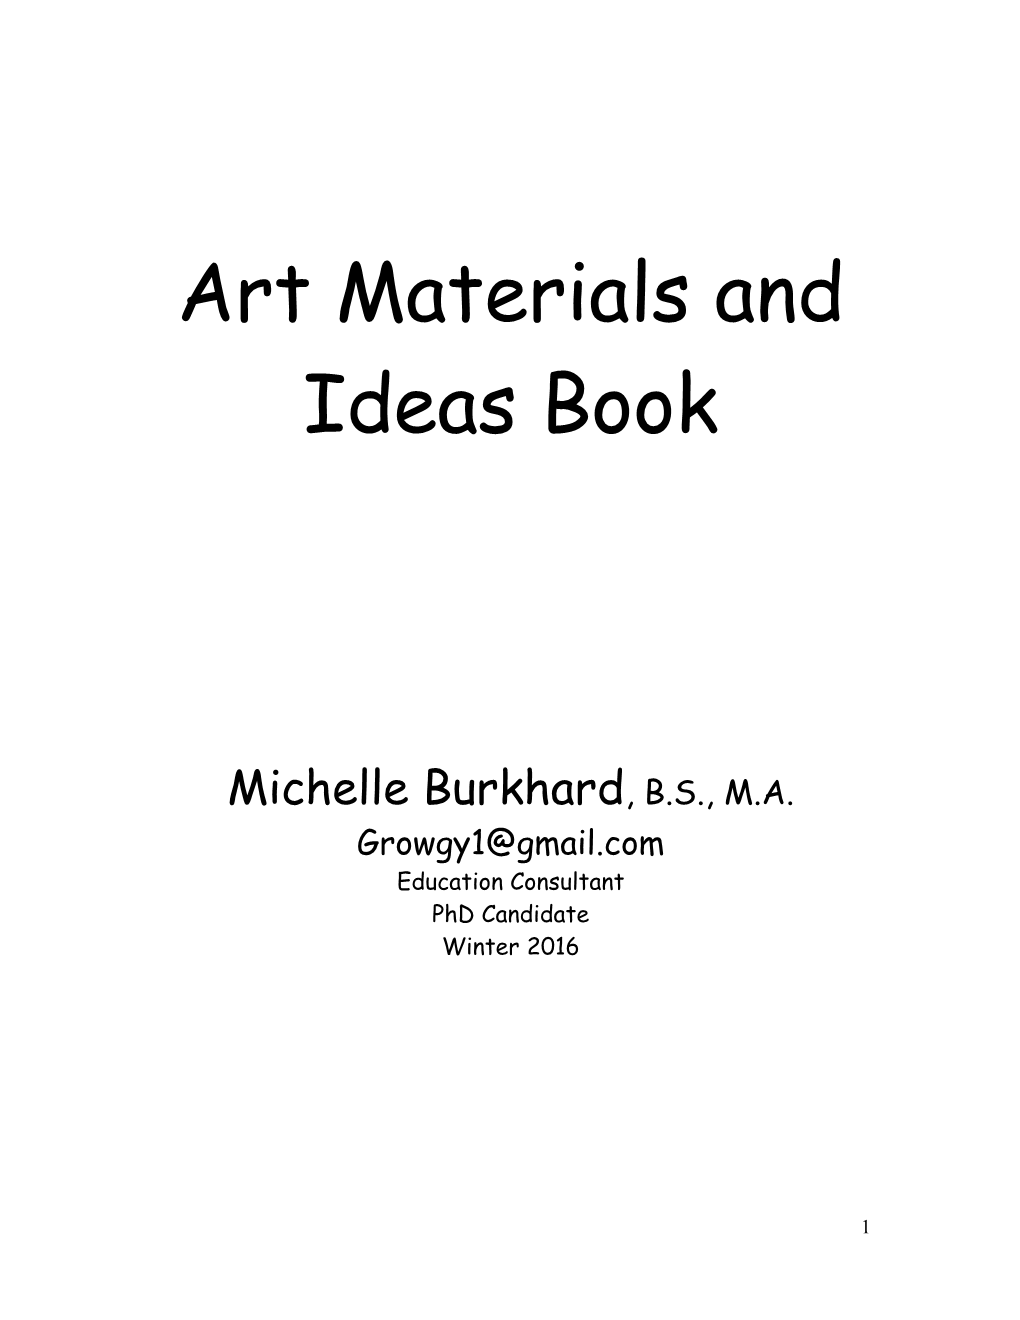 Art Materials and Ideas Book